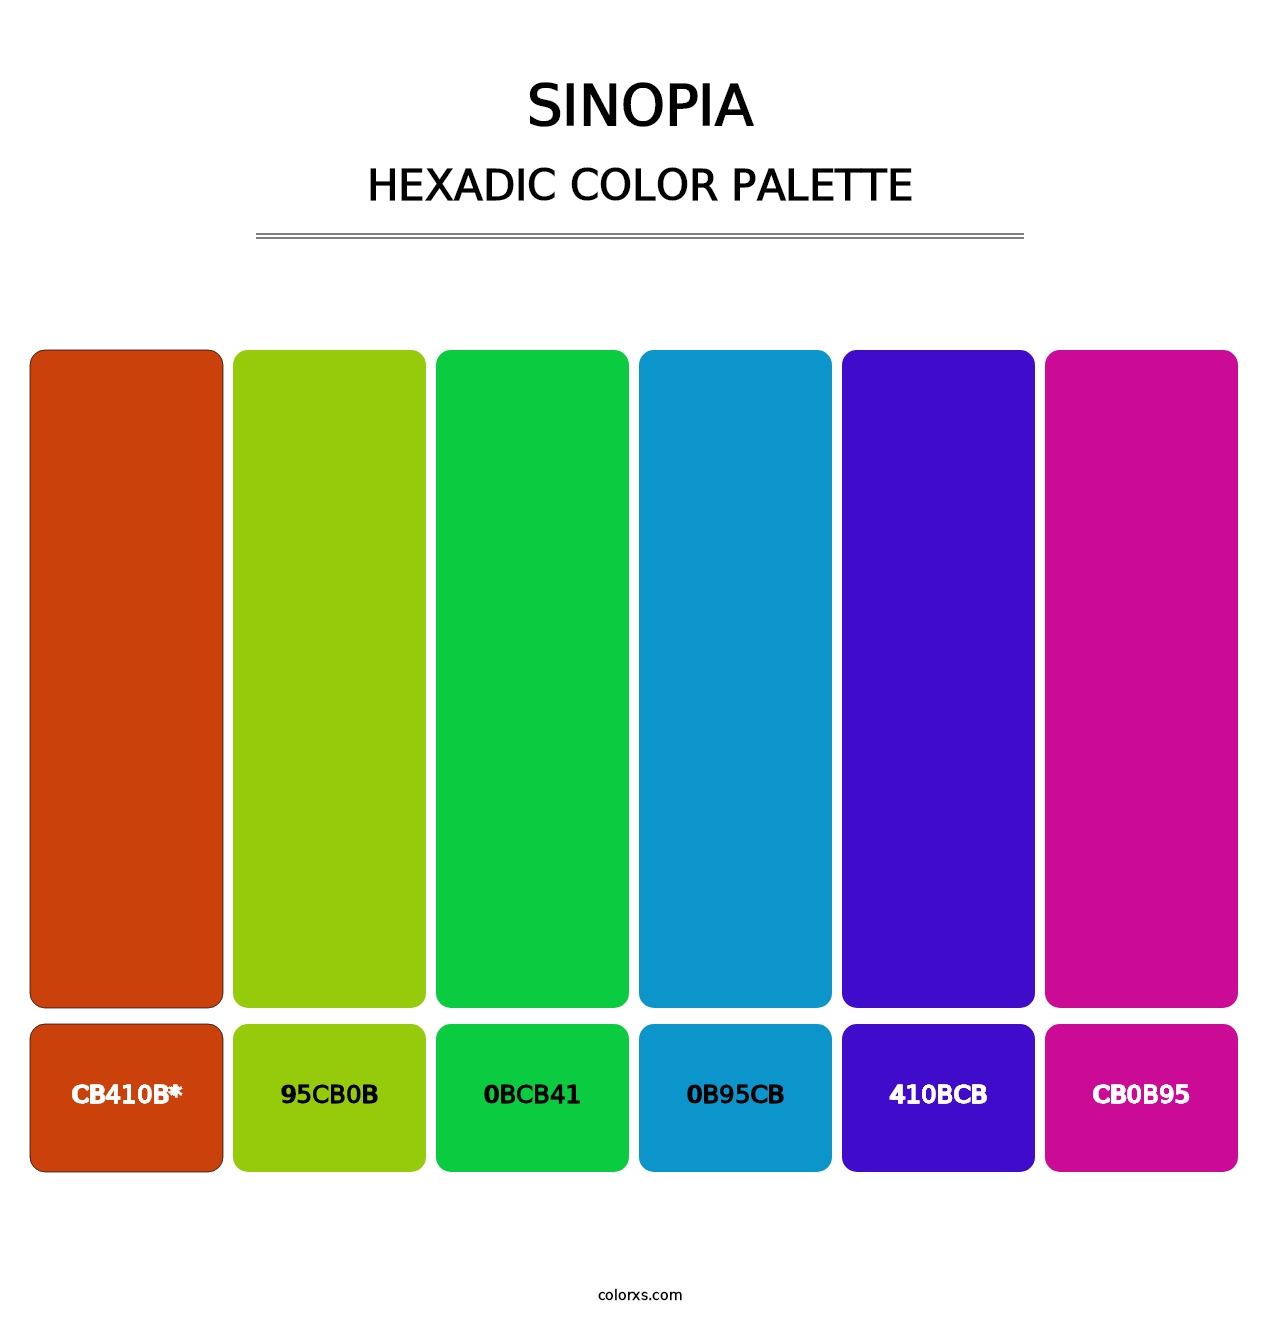 Sinopia - Hexadic Color Palette